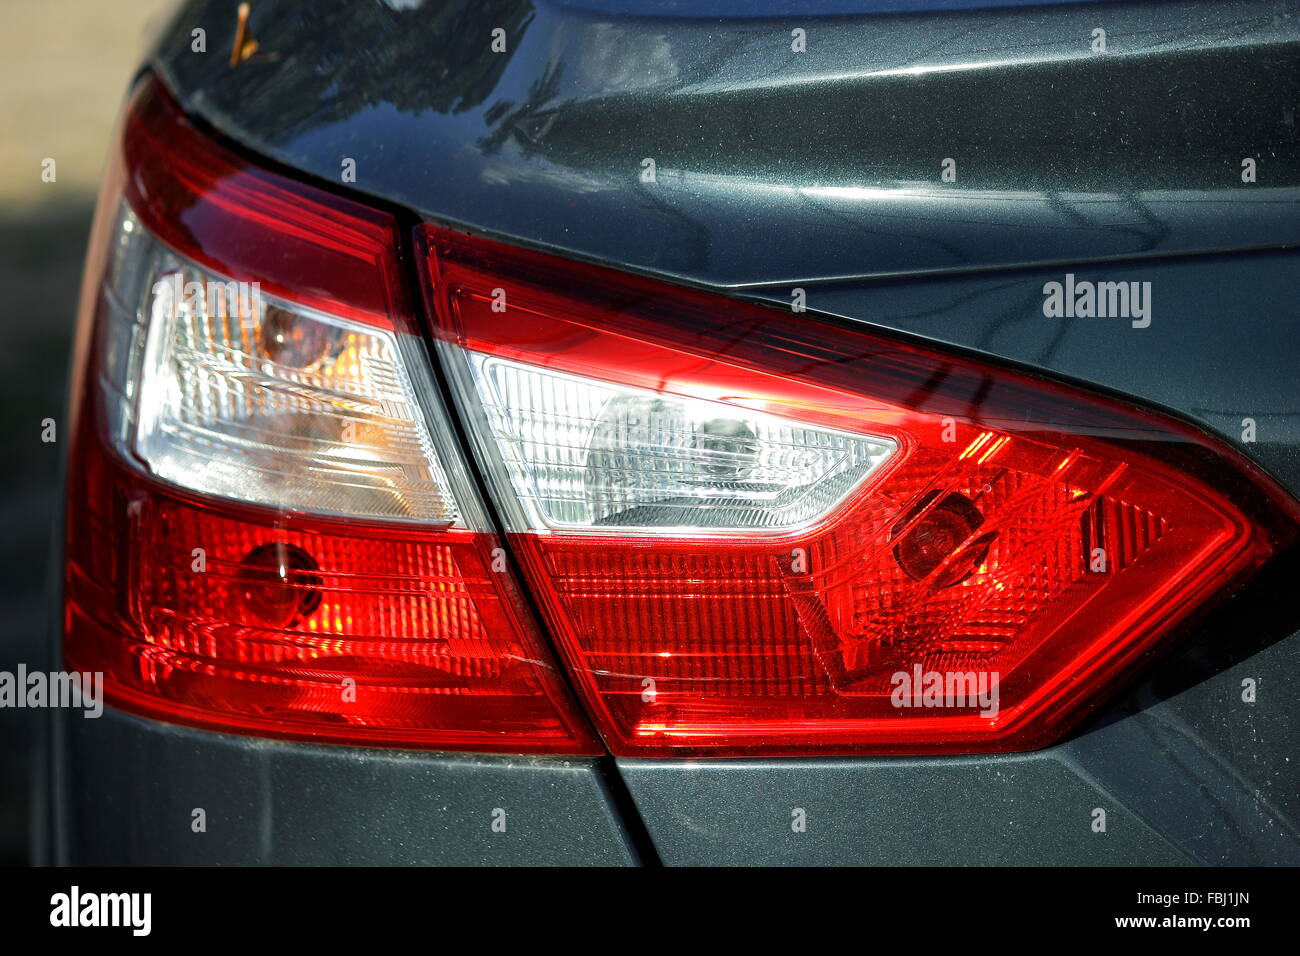 Las luces traseras, luces de freno, luces de marcha atrás está equipado con  luz y luz roja Fotografía de stock - Alamy